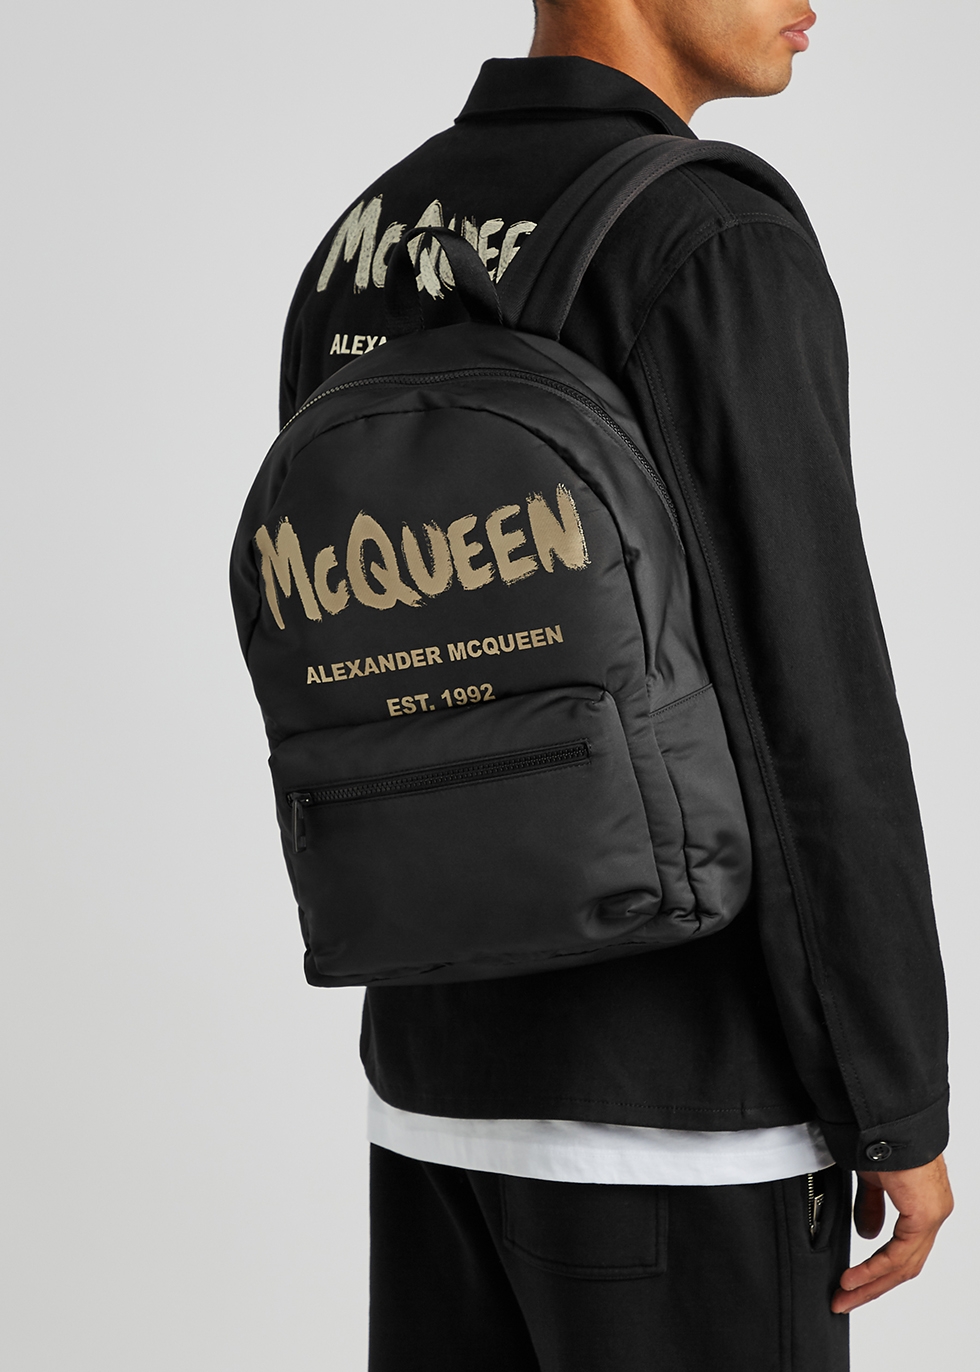 Alexander McQueen Metropolitan black logo nylon backpack 